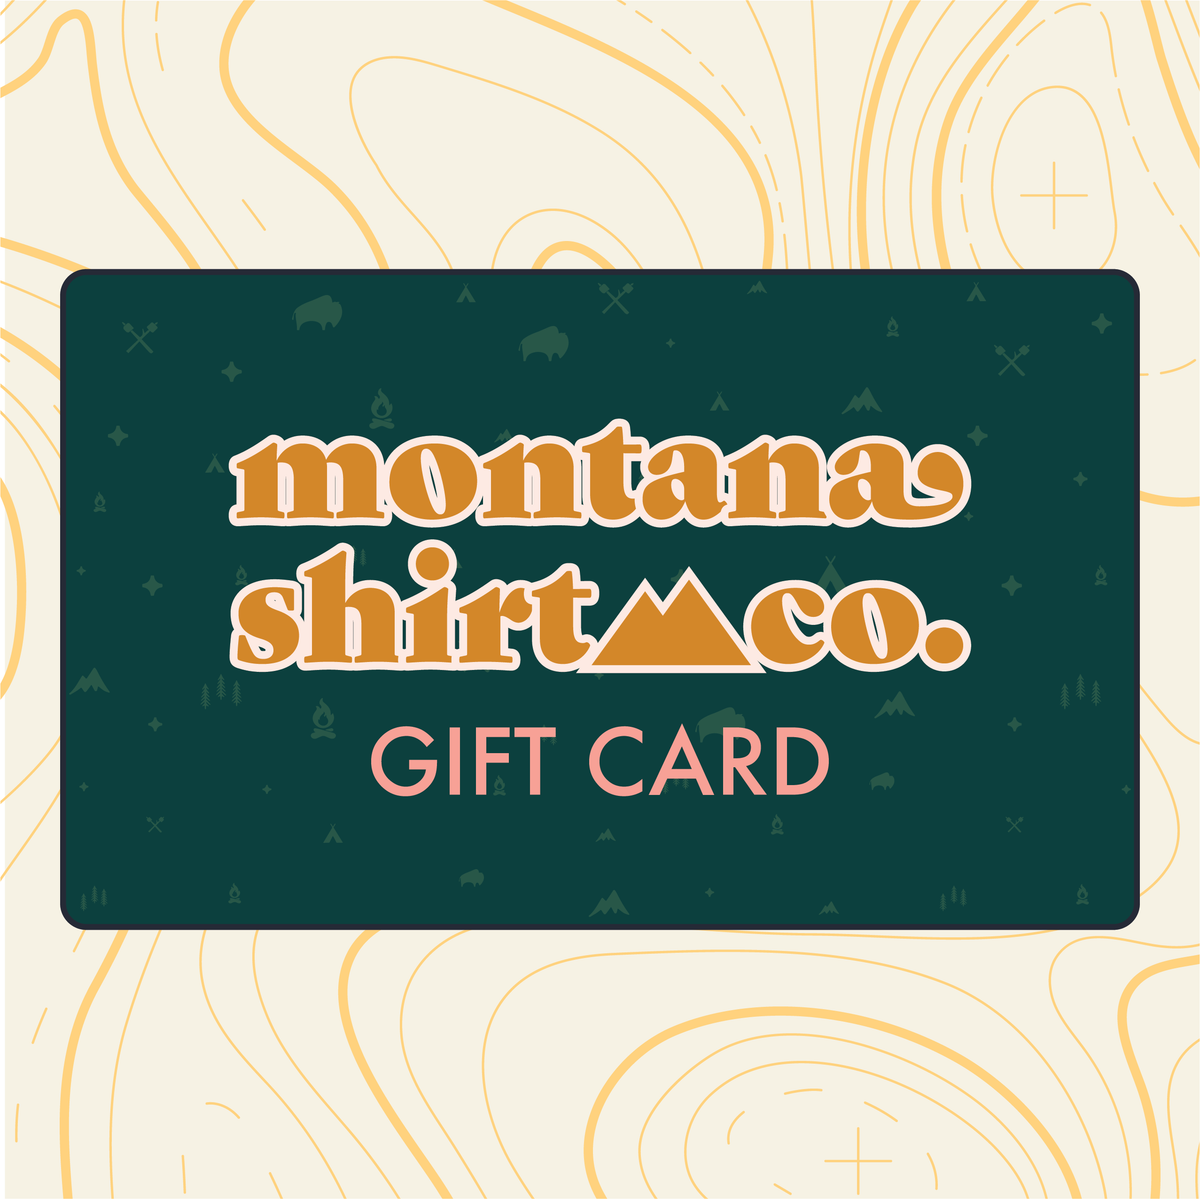 Gift Card - MONTANA SHIRT CO.